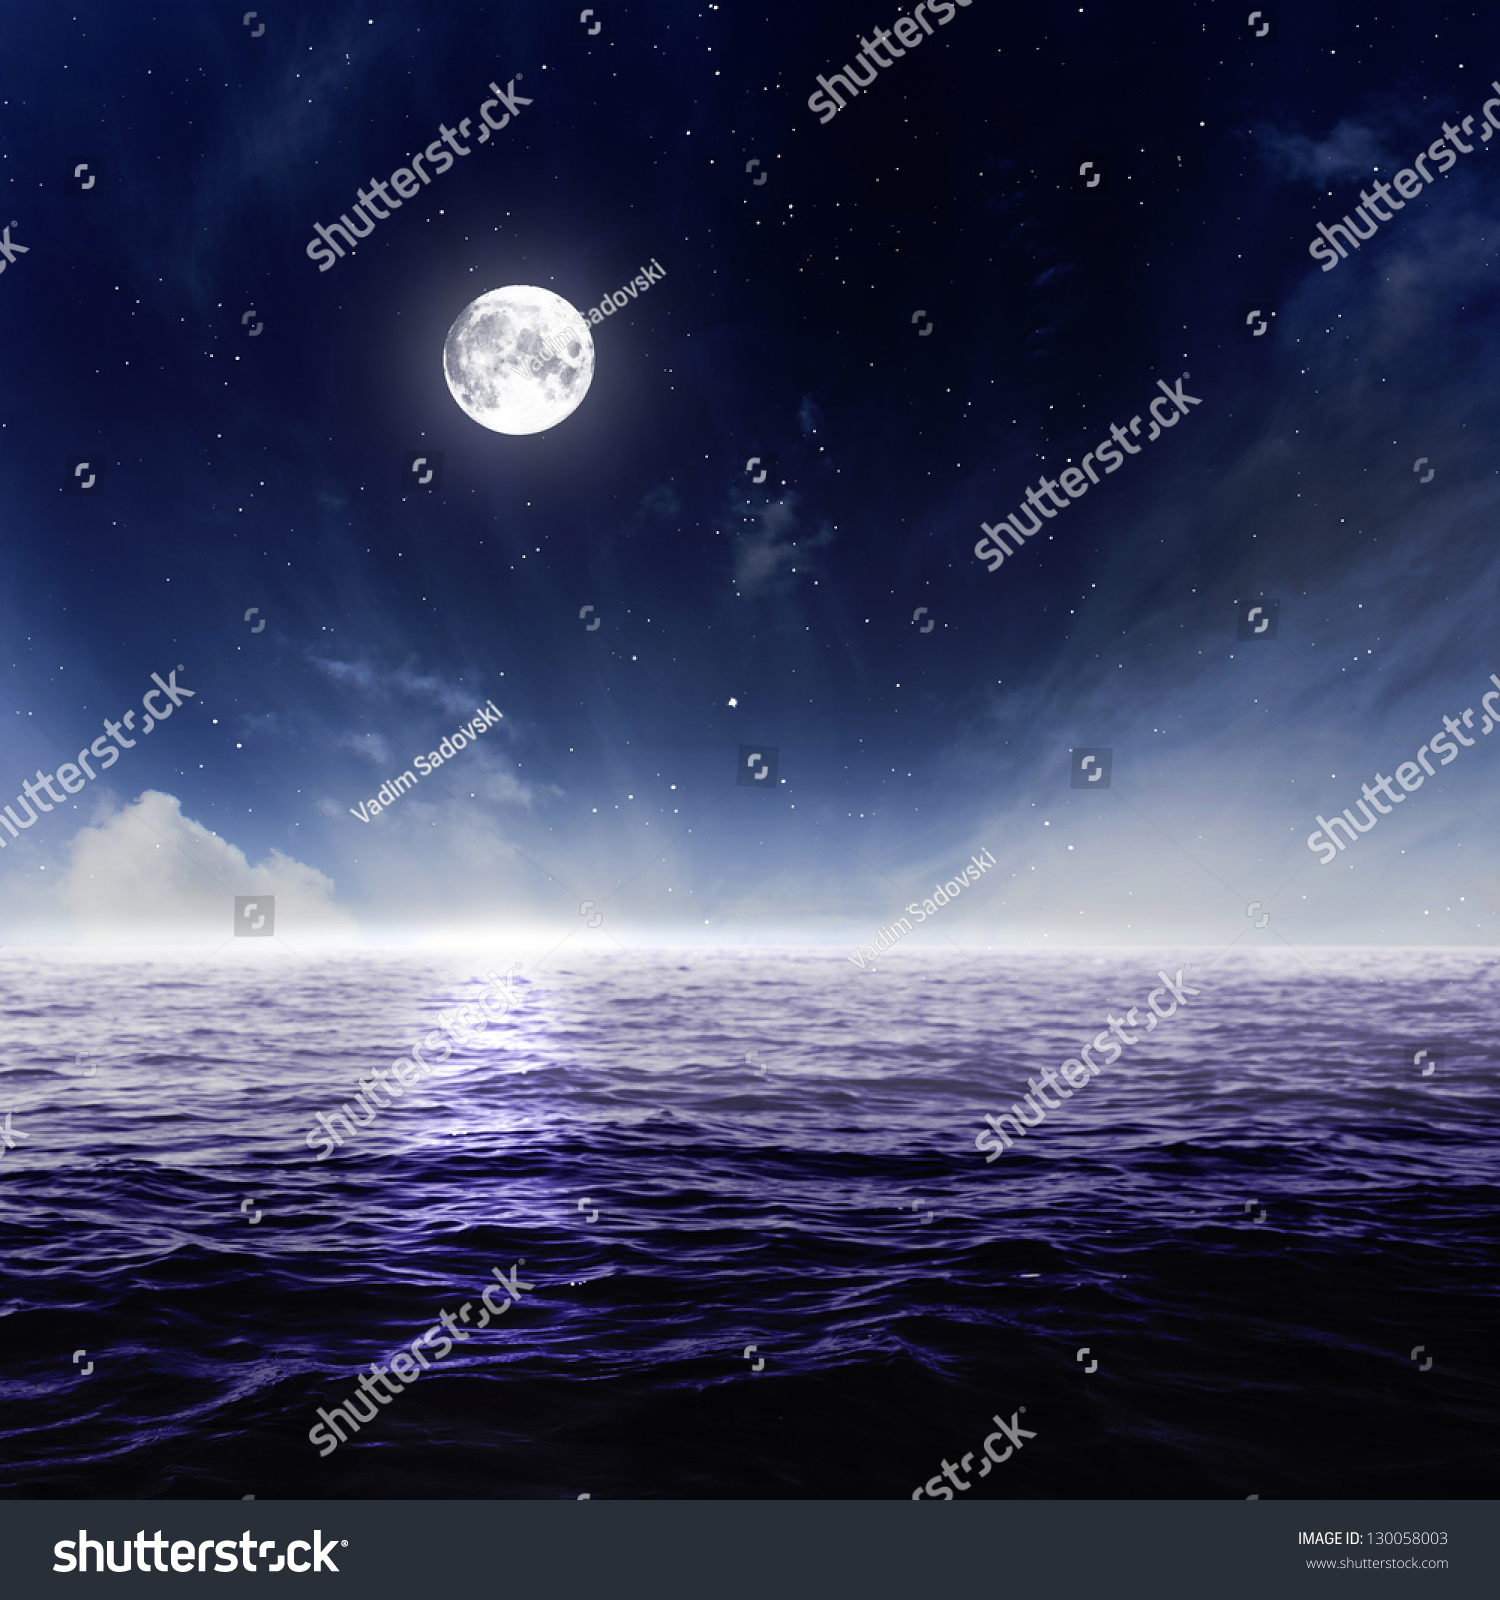 Full Moon In Night Sky Over Moonlit Water Stock Photo 130058003 ...